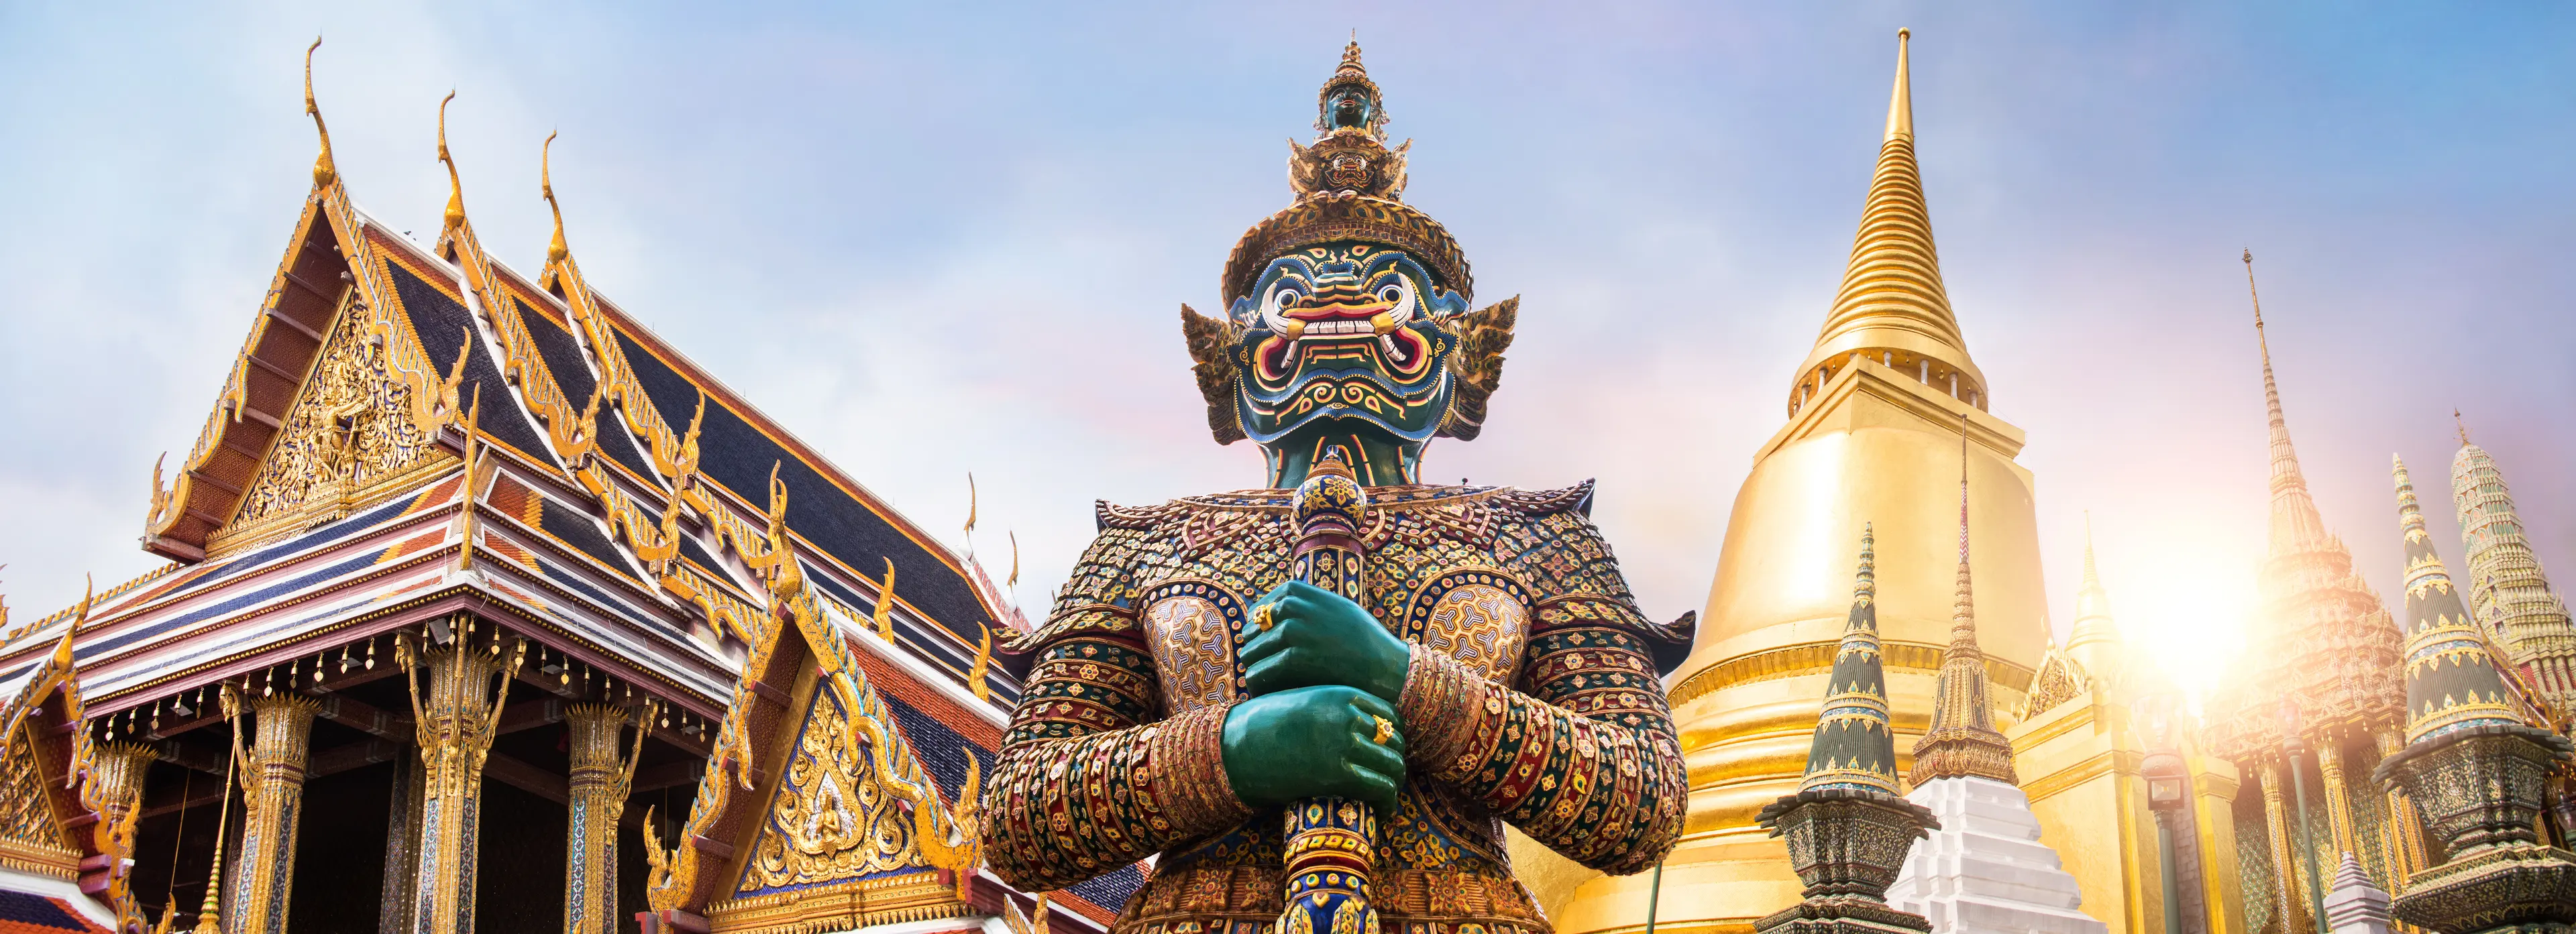 Wat Phra Kaew, Emerald Buddha temple